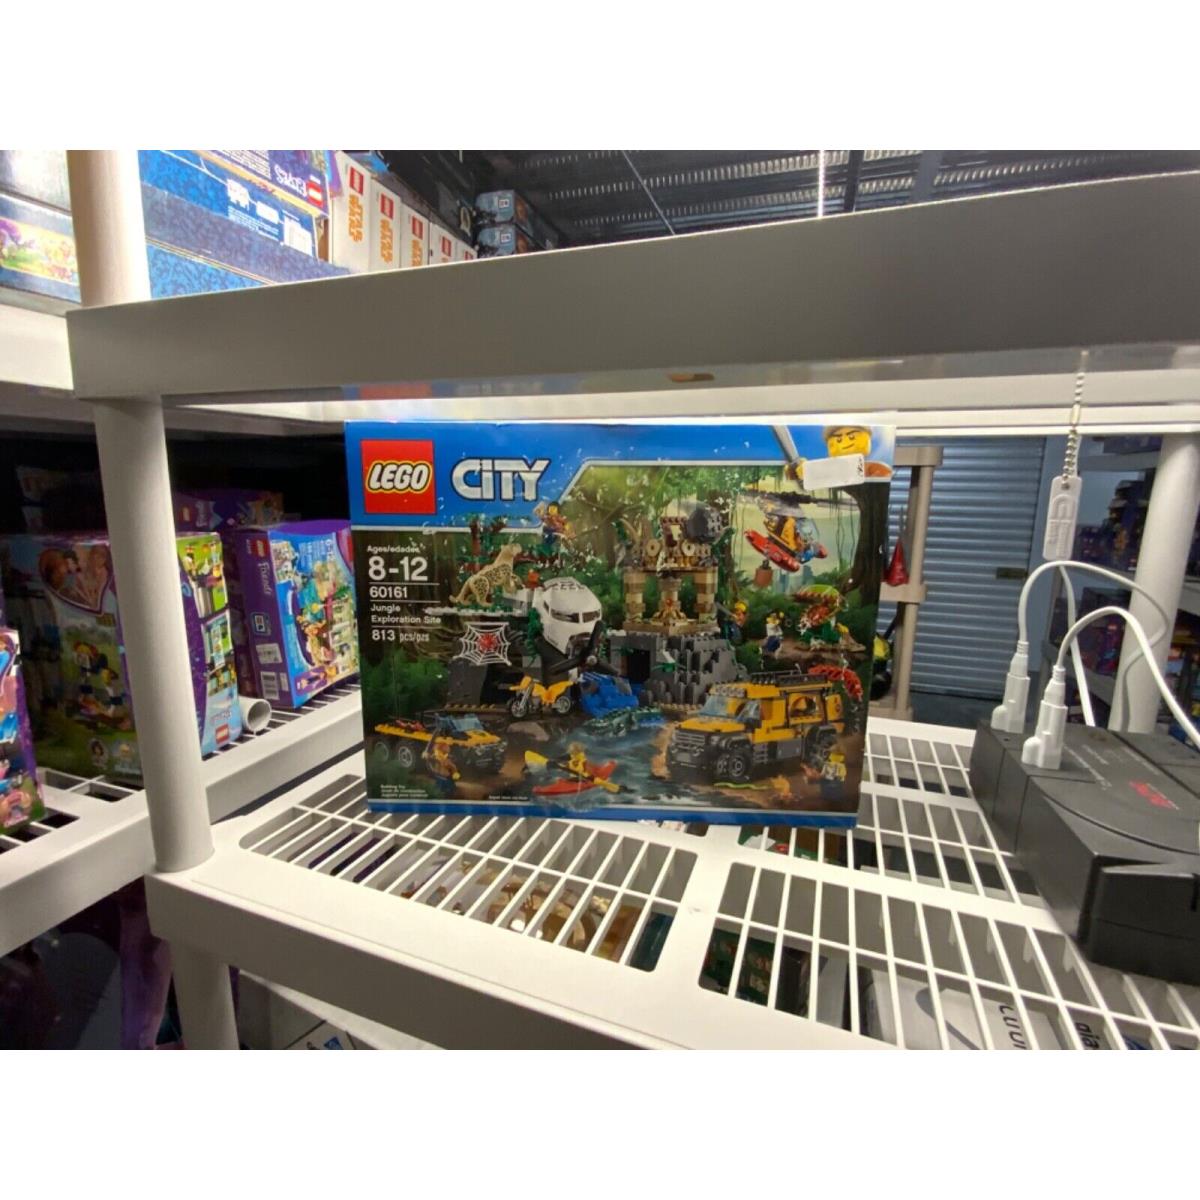 2017 Retired: Lego City 60161 Jungle Exploration Site Box